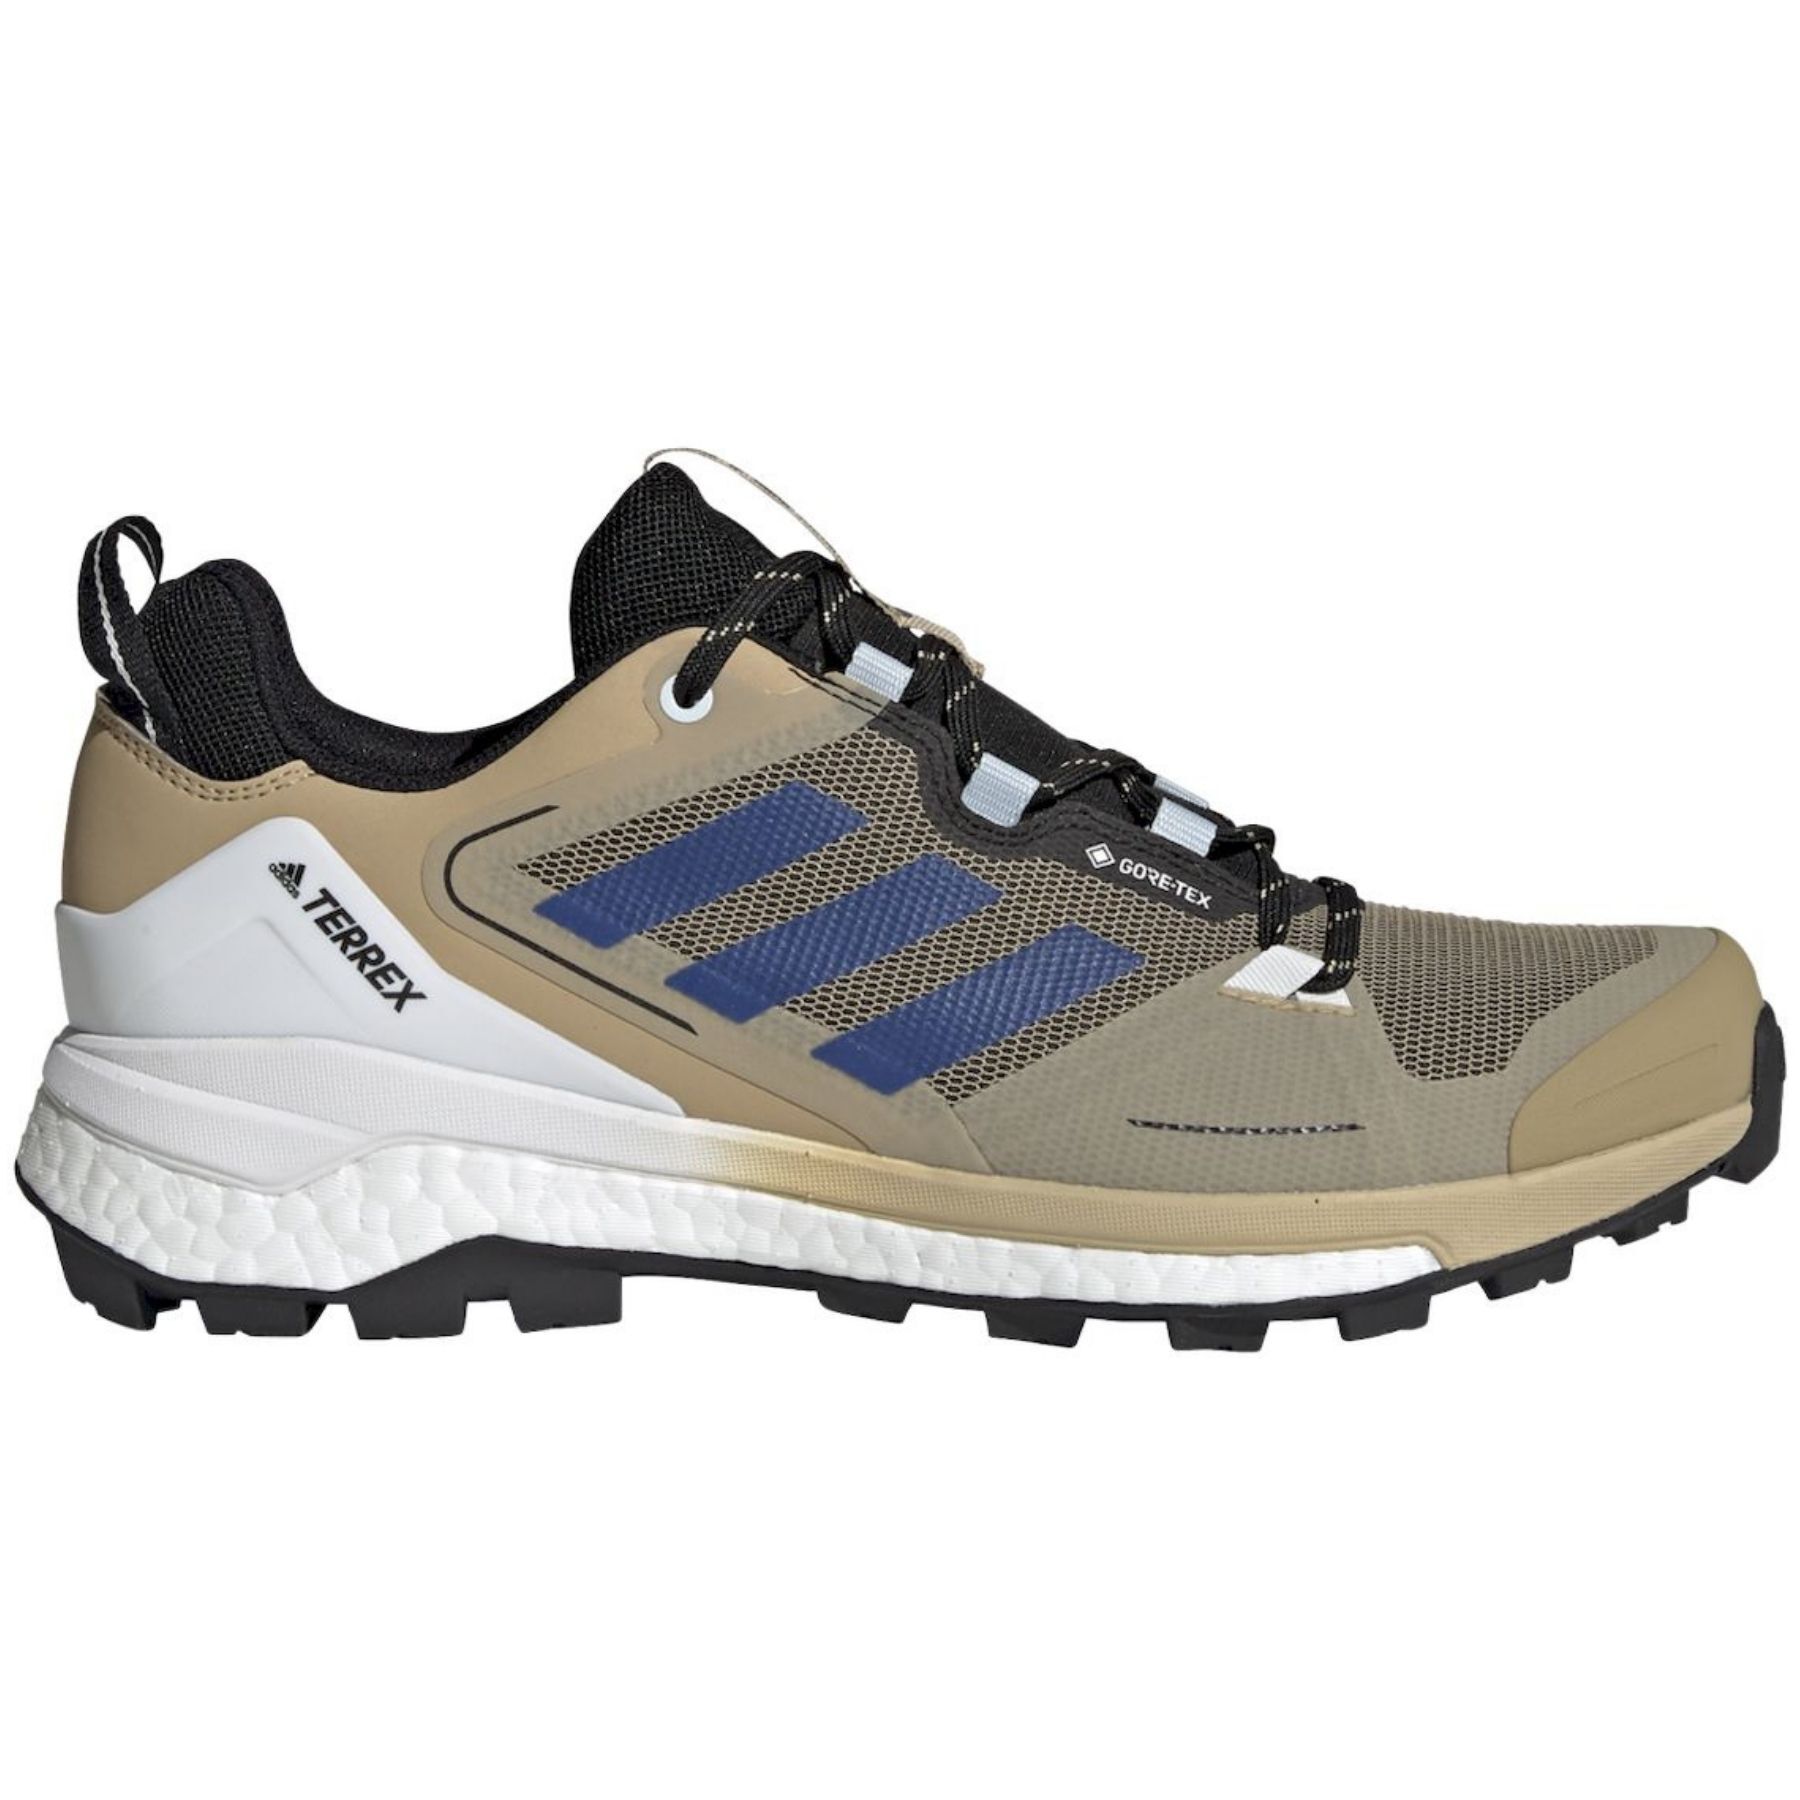 Adidas Terrex Skychaser 2 GTX - Walking shoes - Men's